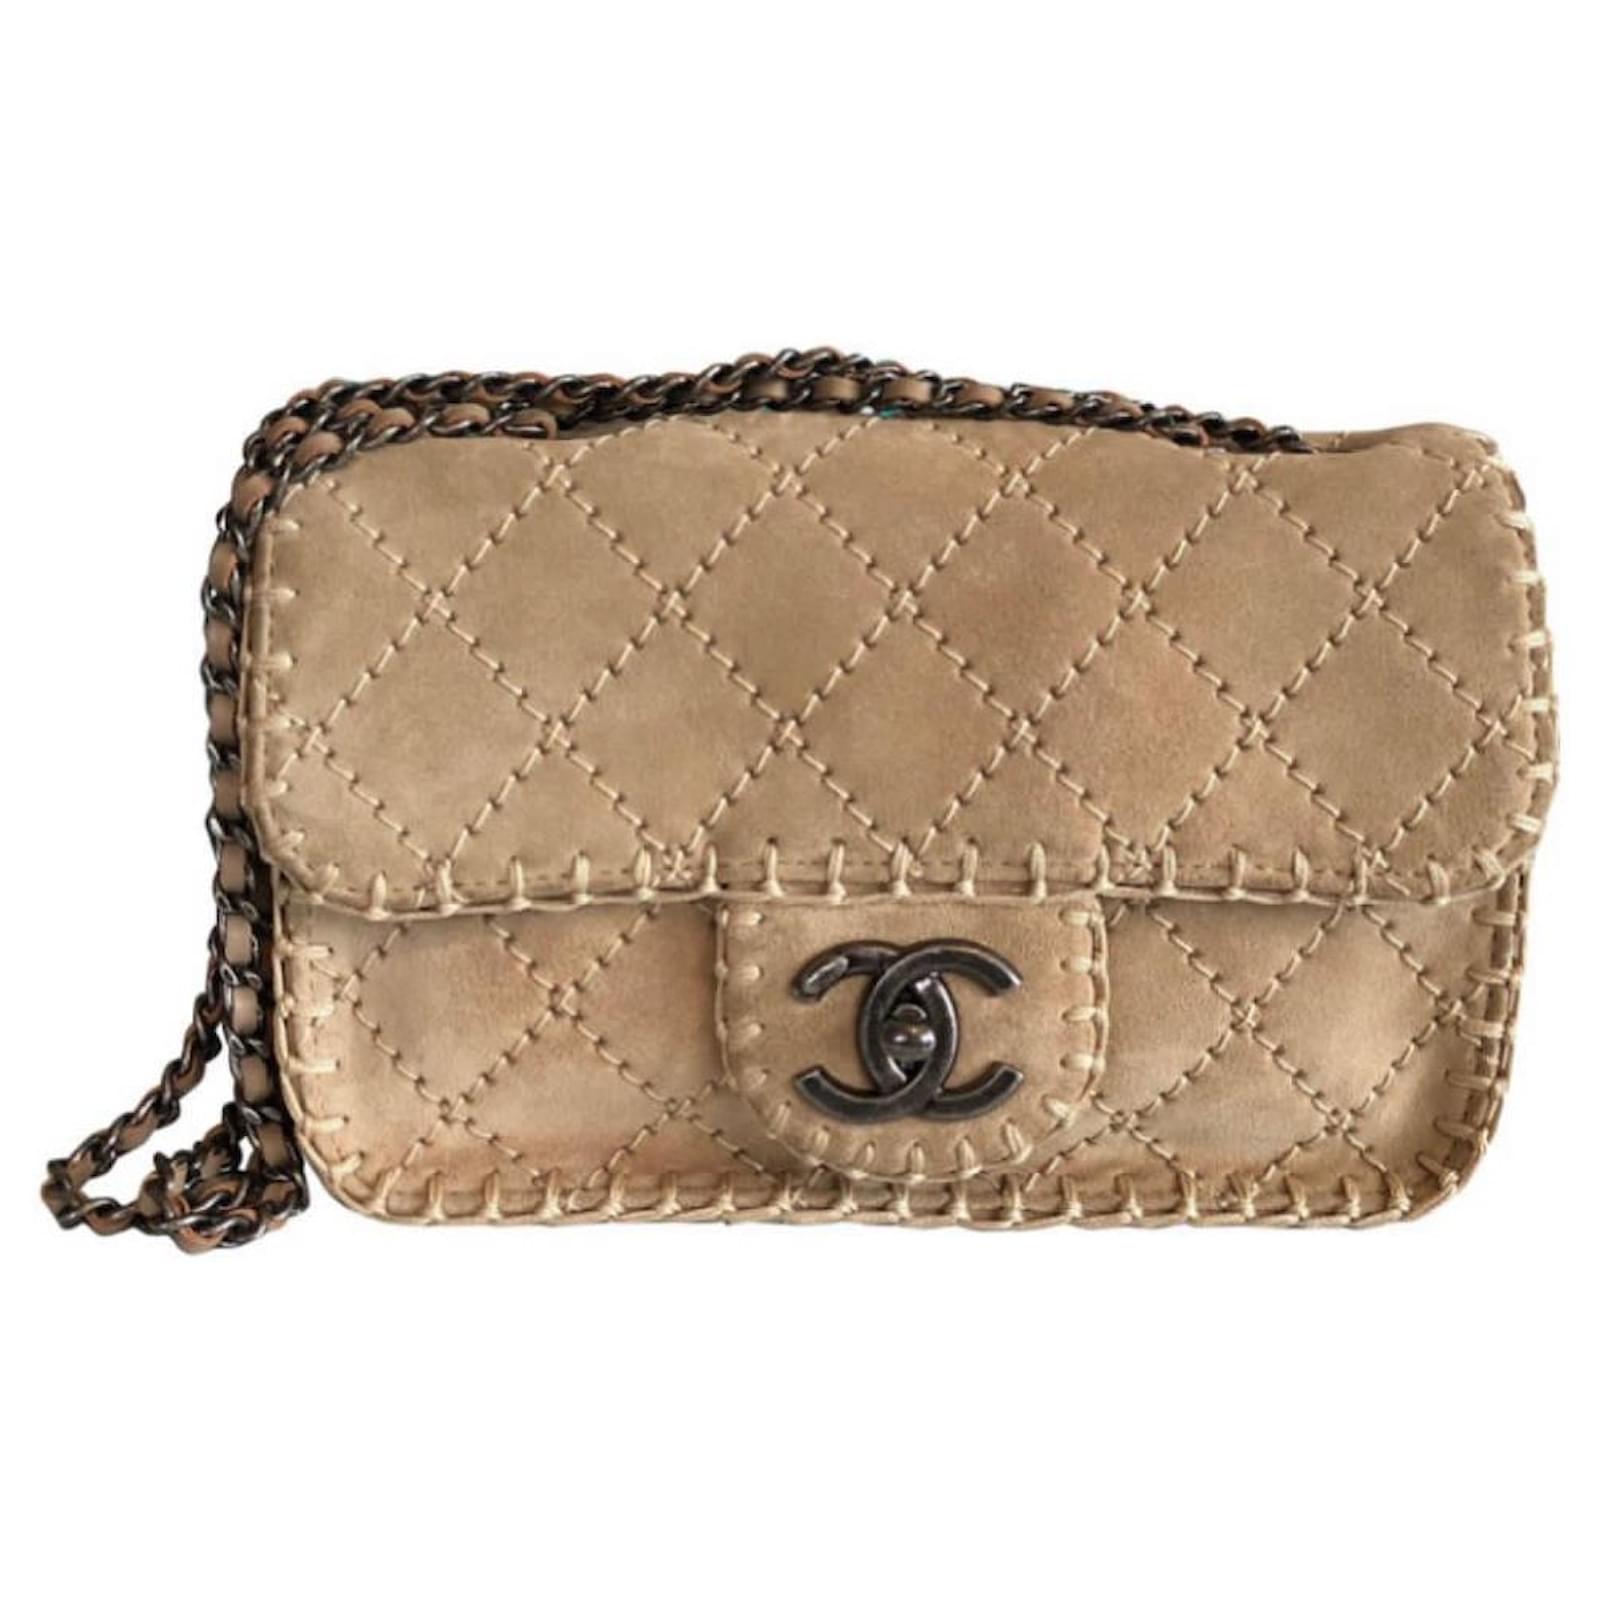 Chanel Beige Quilted Leather Wild Stitch Surpique Flap Bag